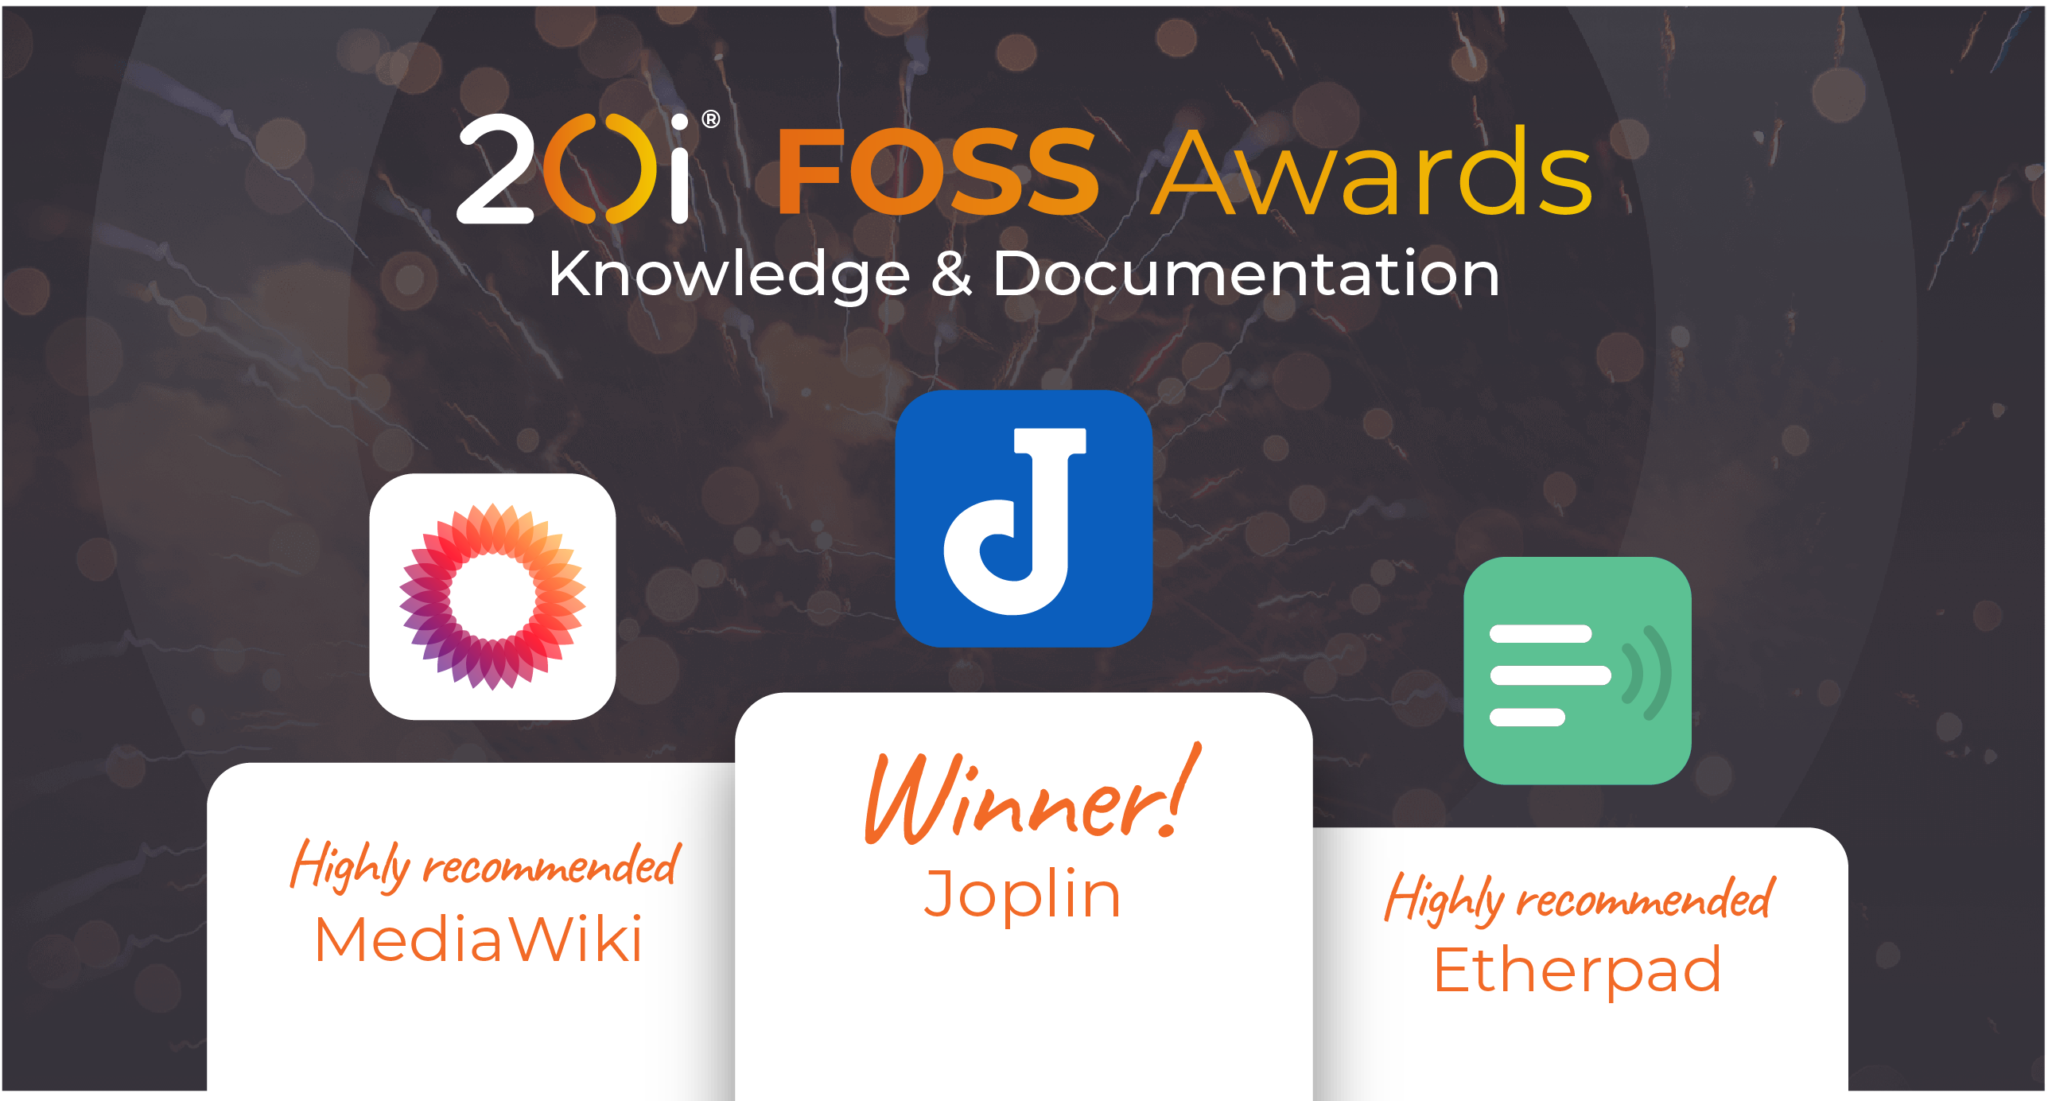 20i foss awards winners 2023 - knowledge & documentation category